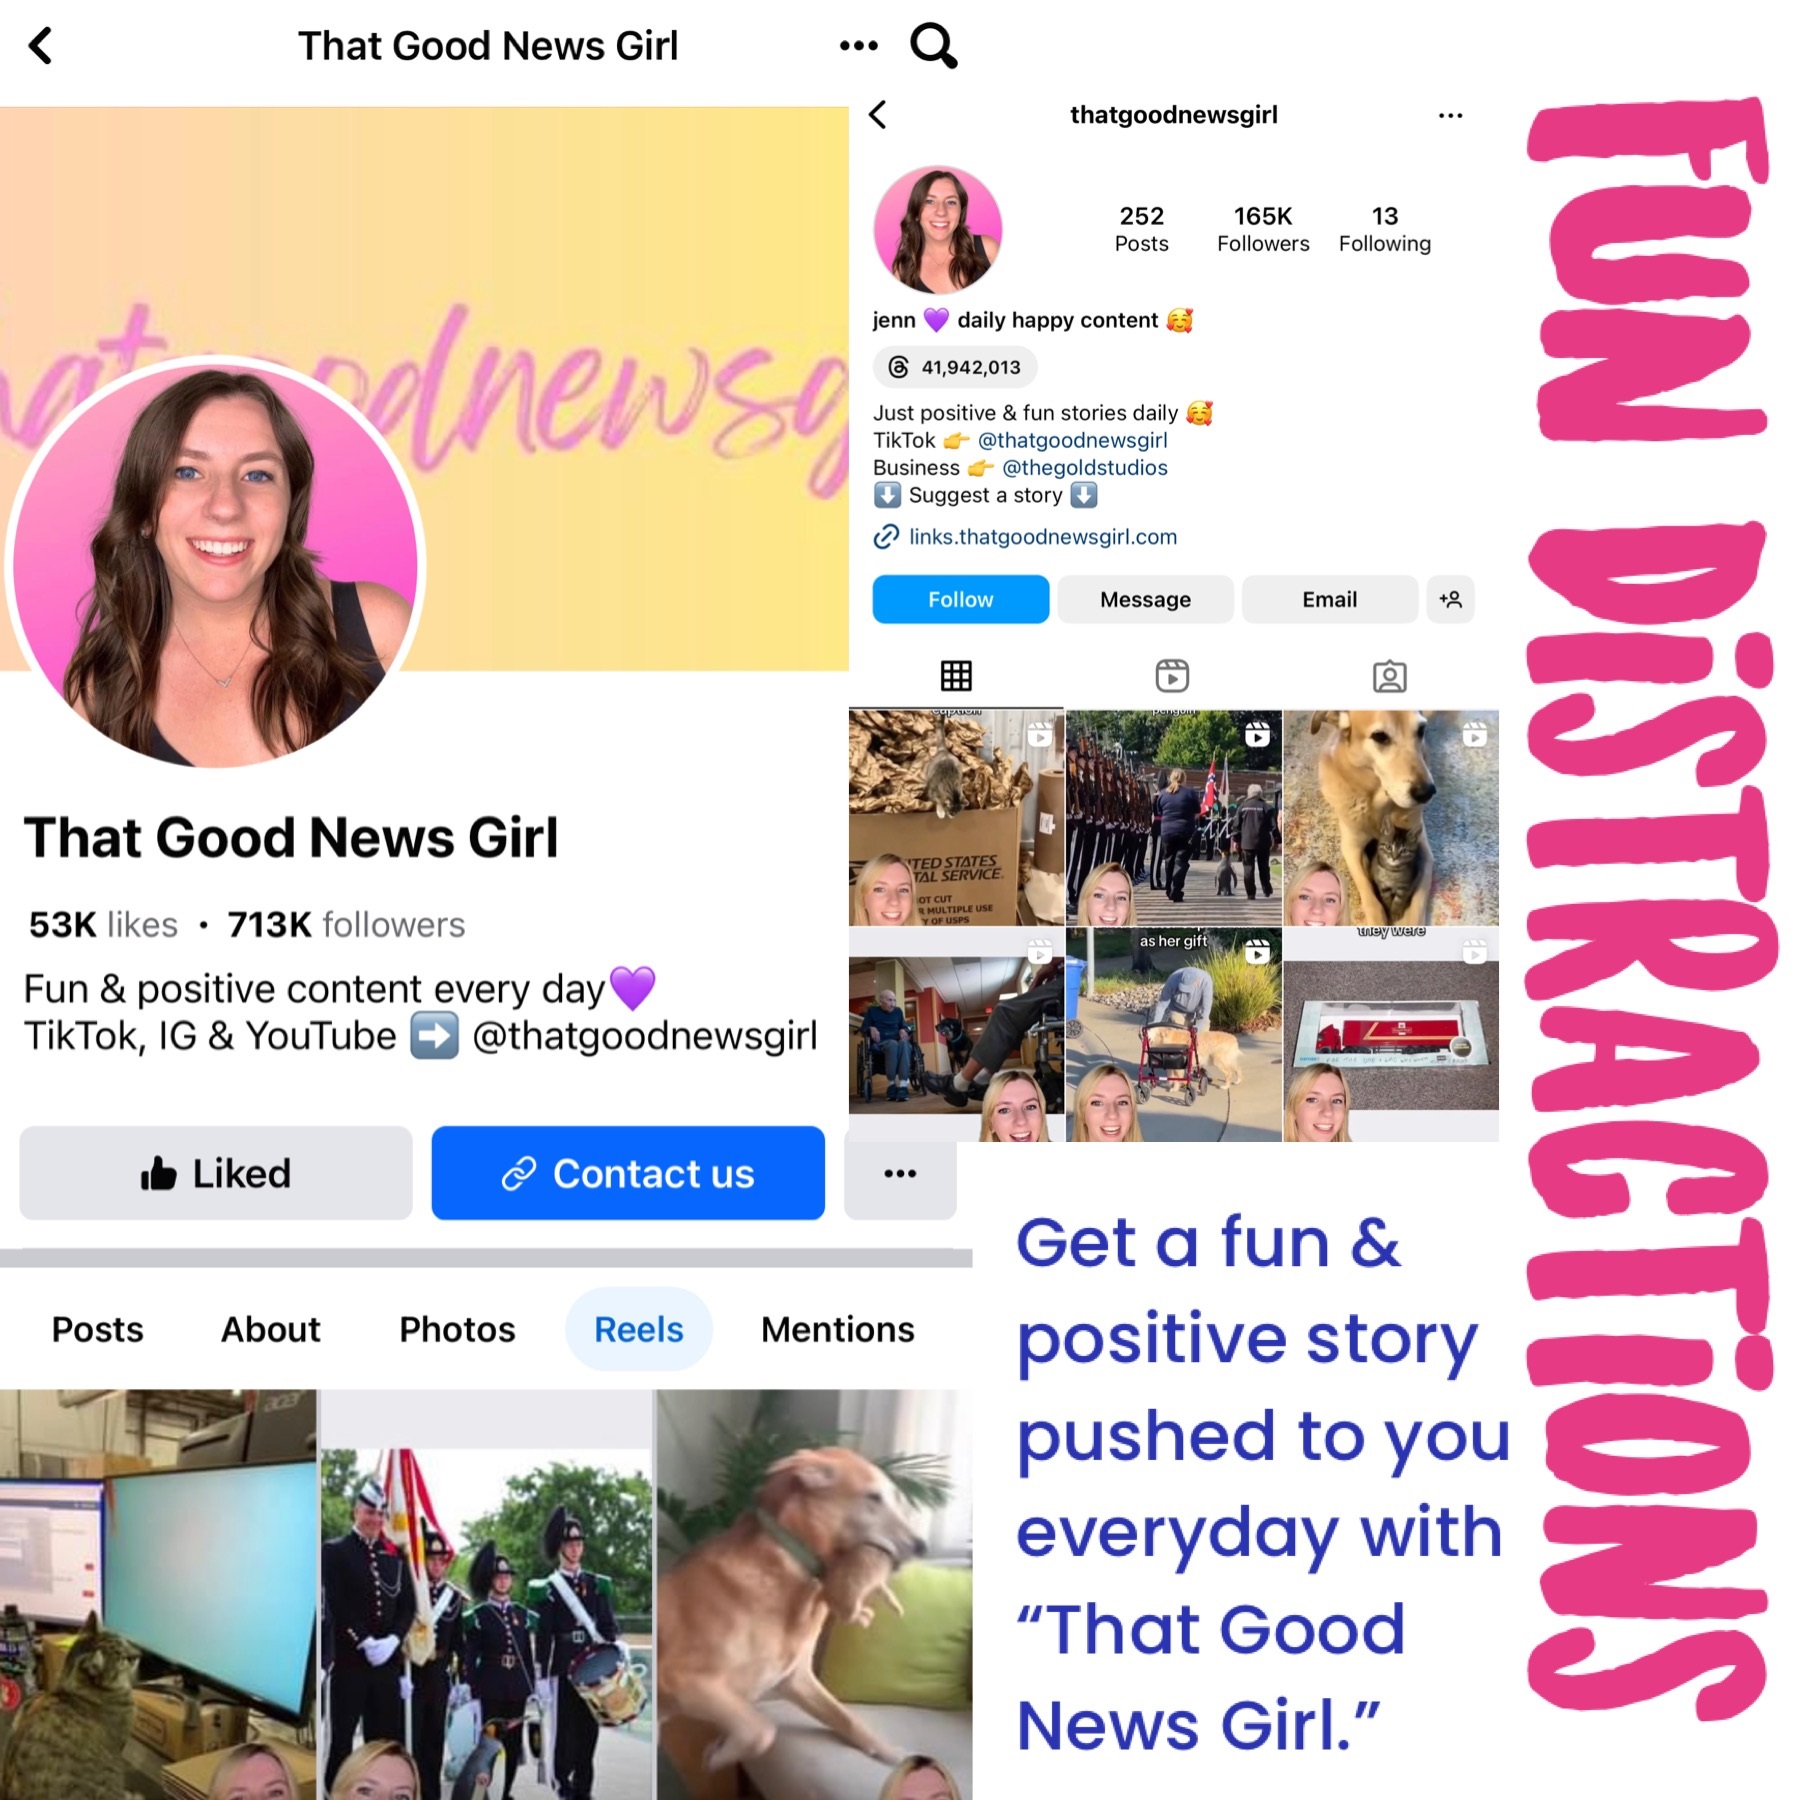 Sample postings from That Good News Girl